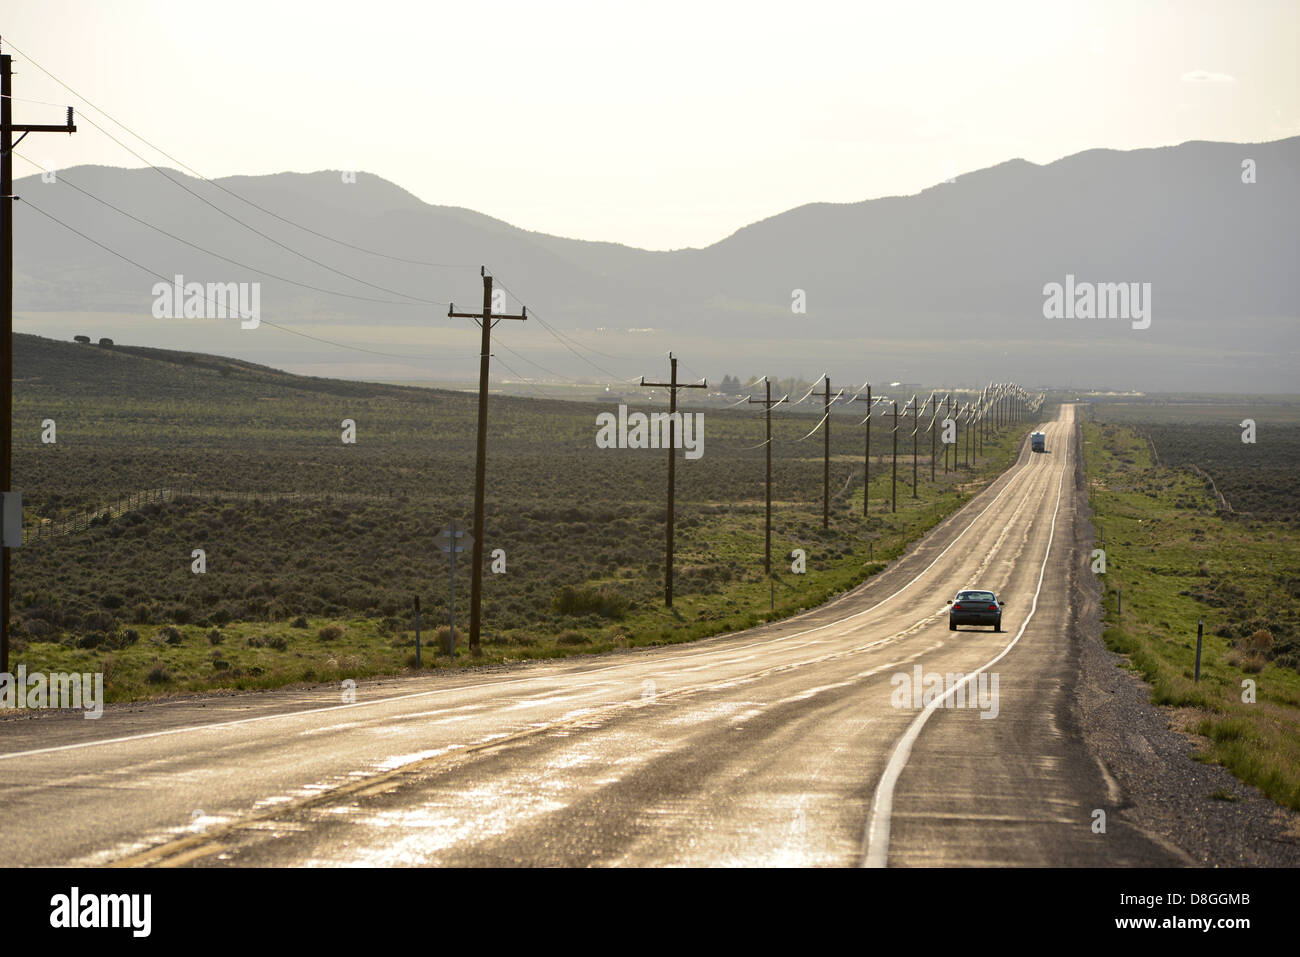 Highway 36 in the Great Basin region of Utah. Stock Photo